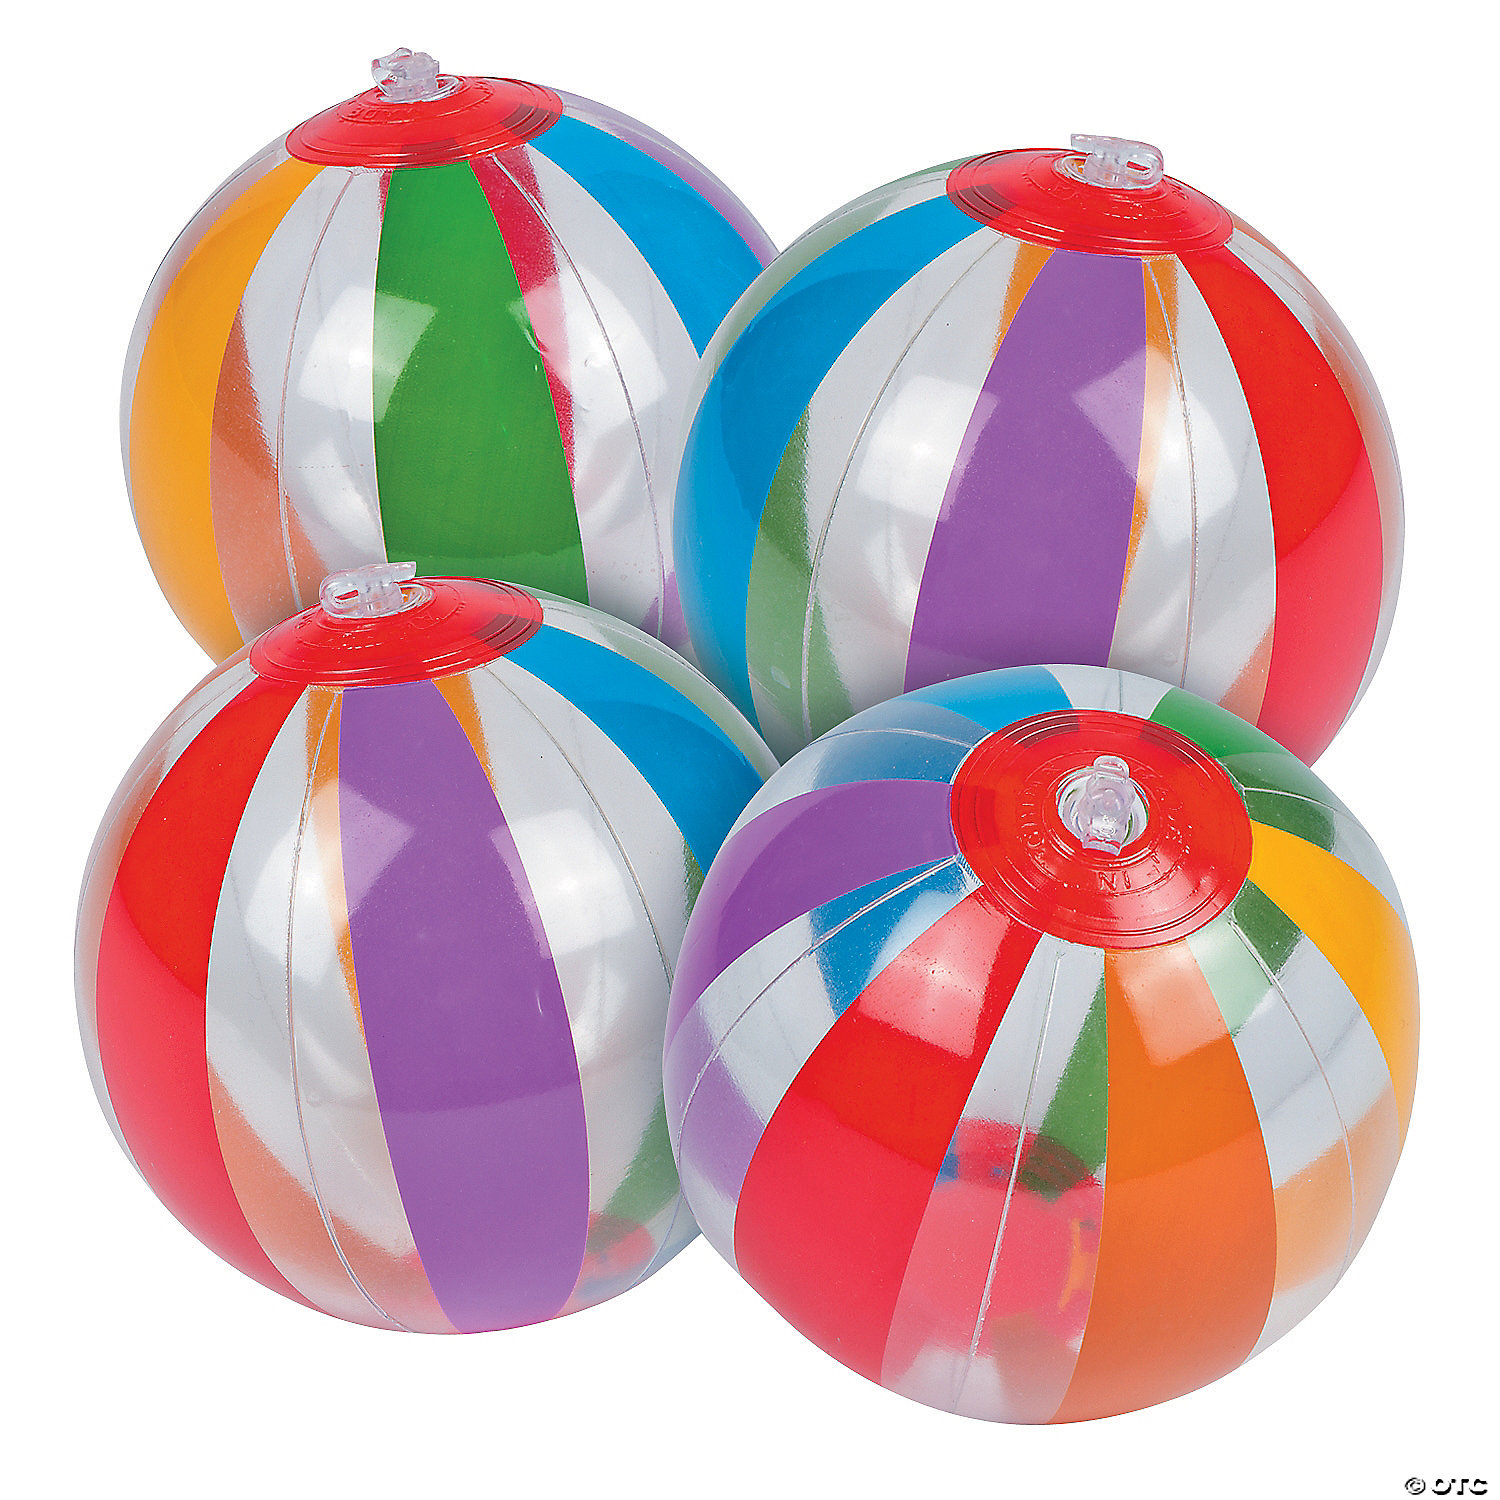 Mini Beach Balls Fun Express Mini Hibiscus Print Beach Balls Inflates 12 Pieces Oriental Trading Company 49/278 Toys 